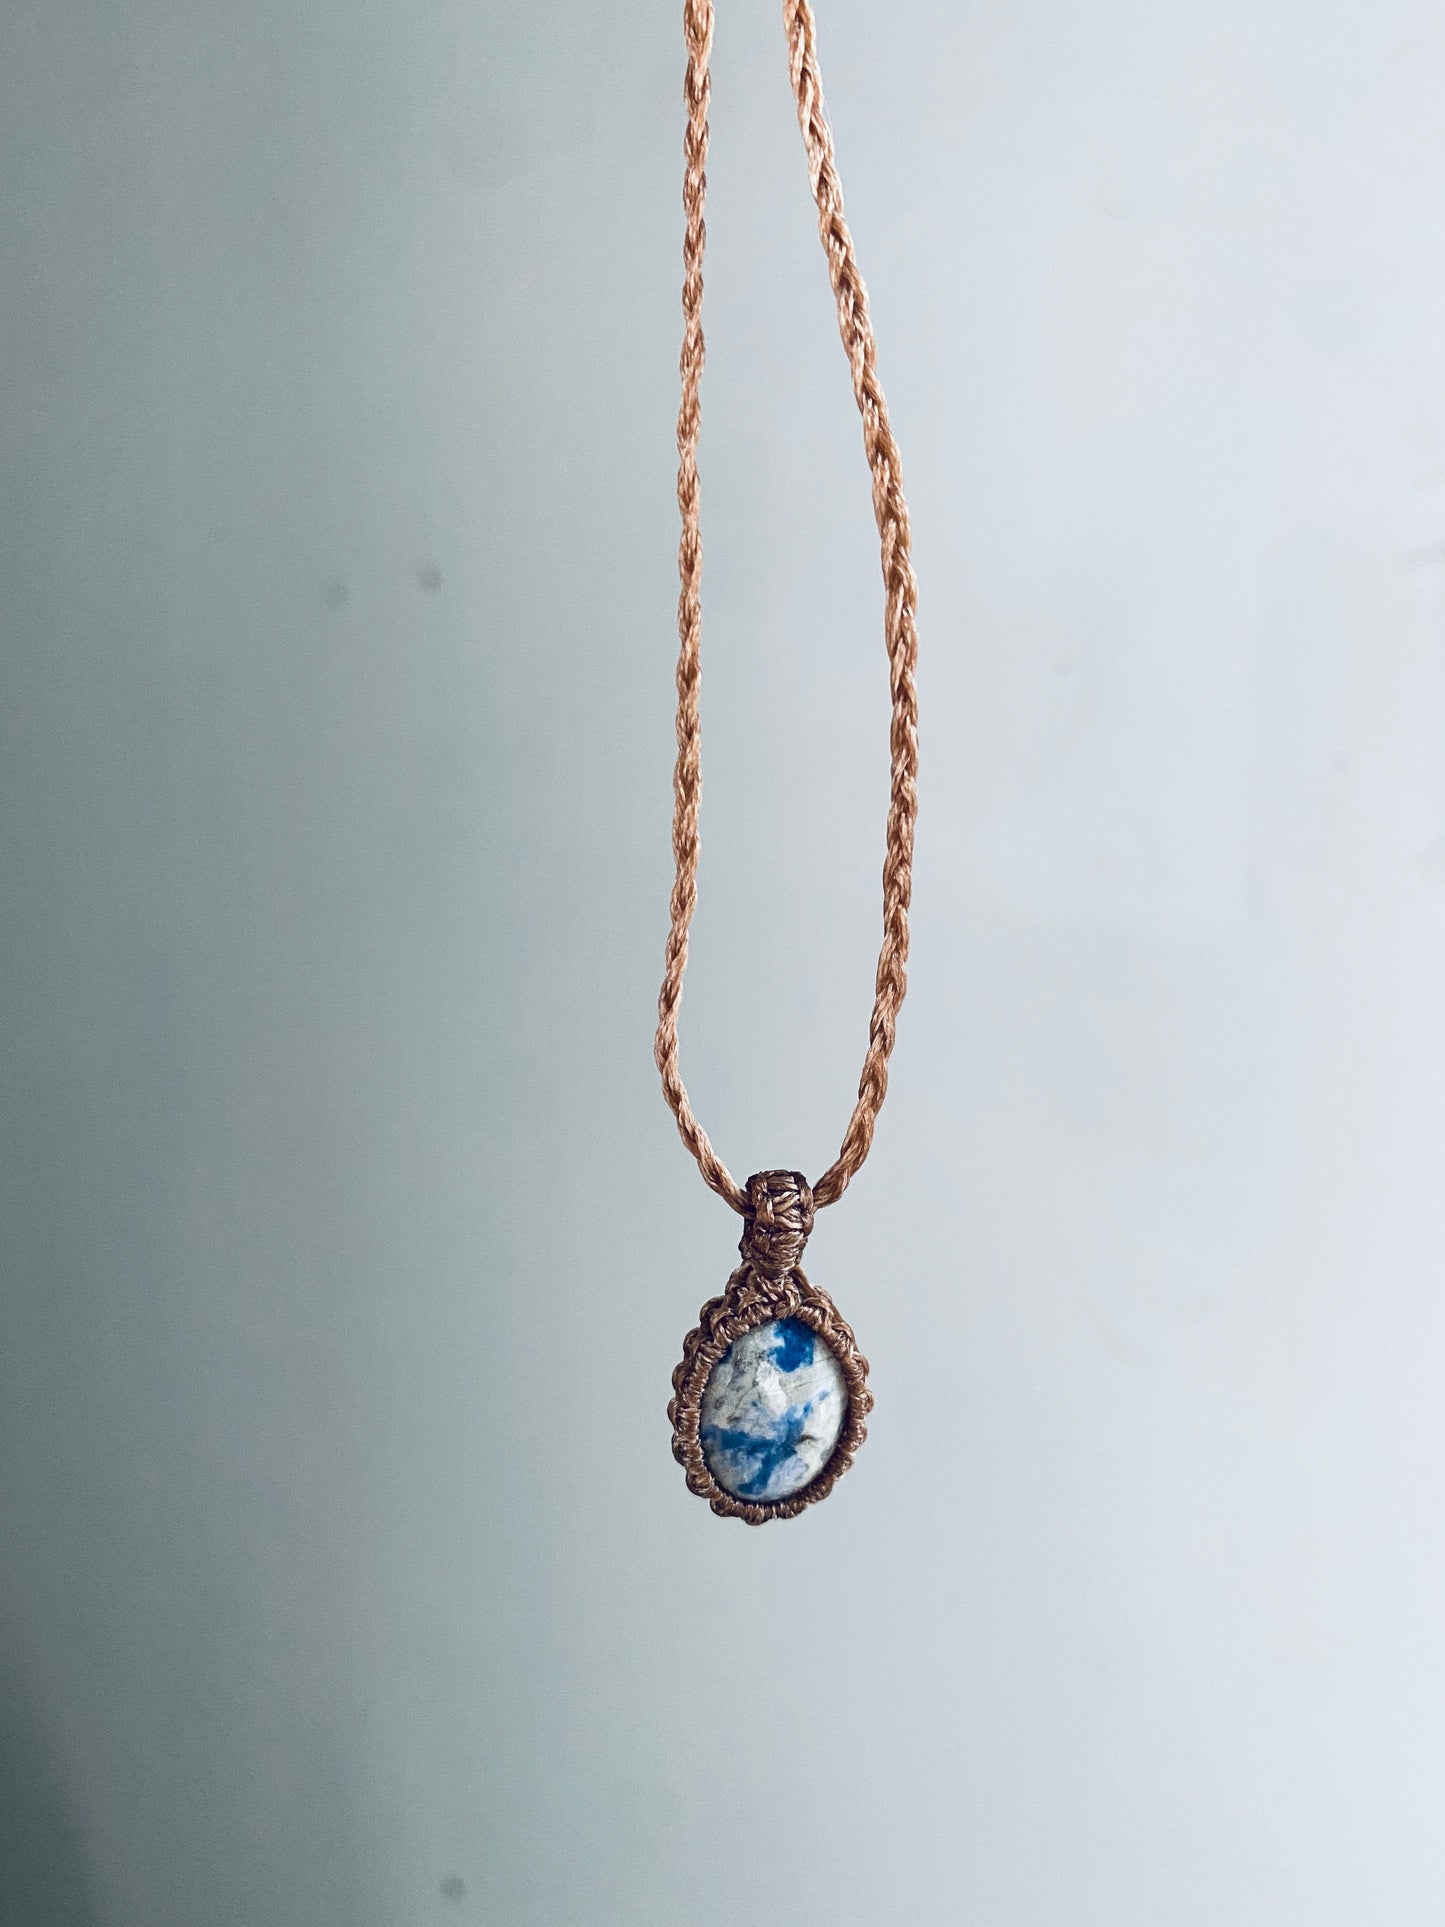 Collier artisanal - Kétonite azulite